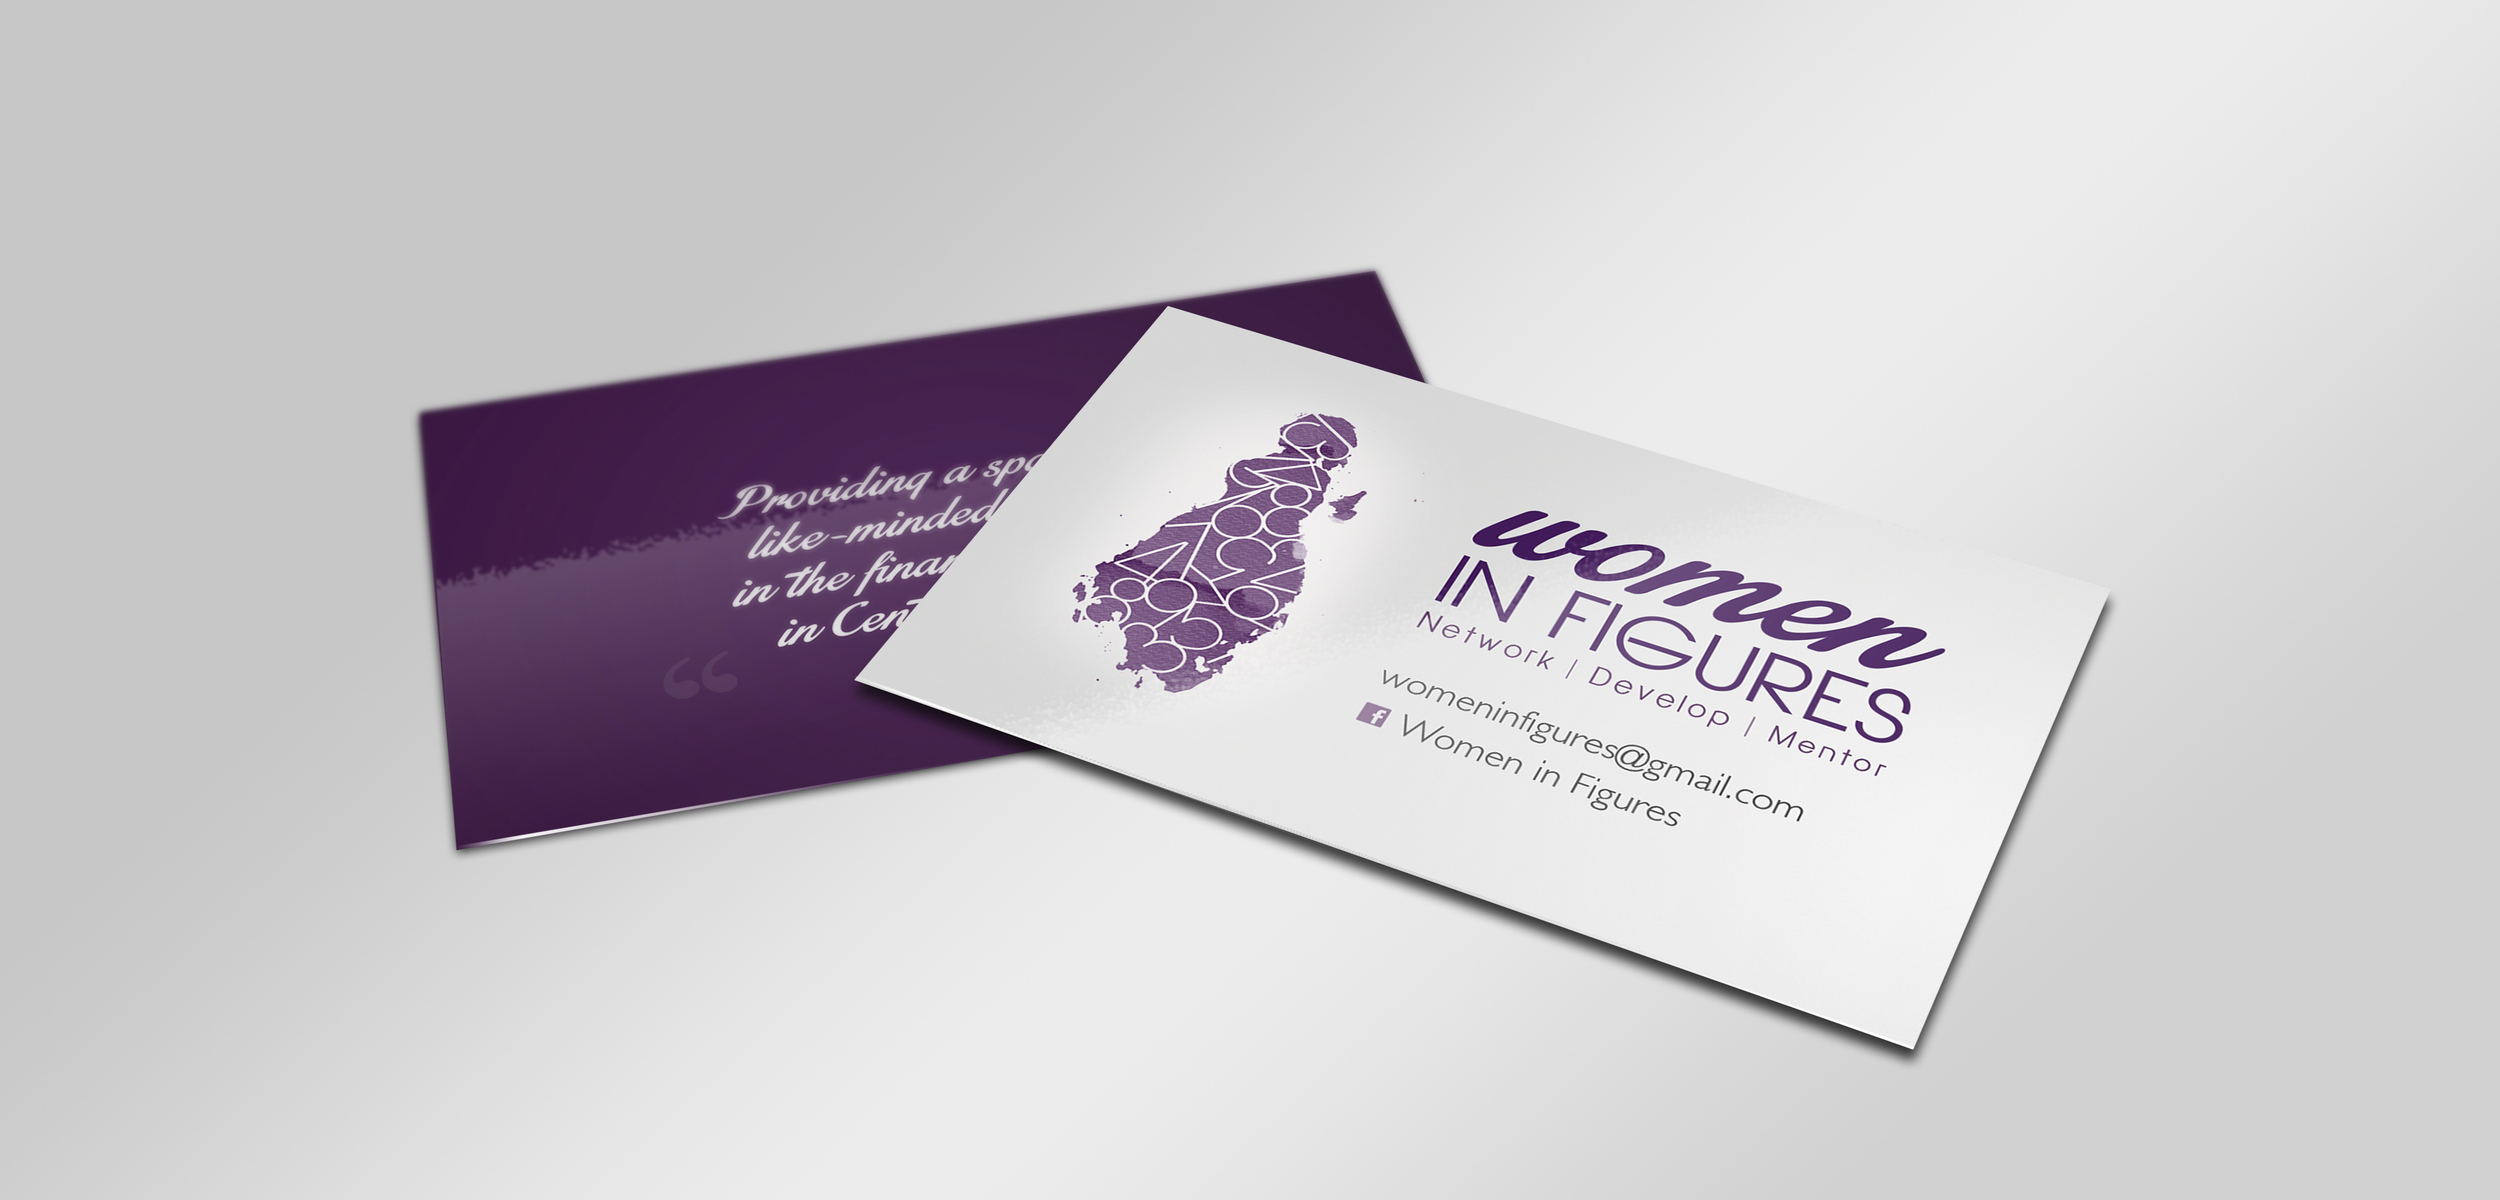  Business card design for Women in Figures.&nbsp; 